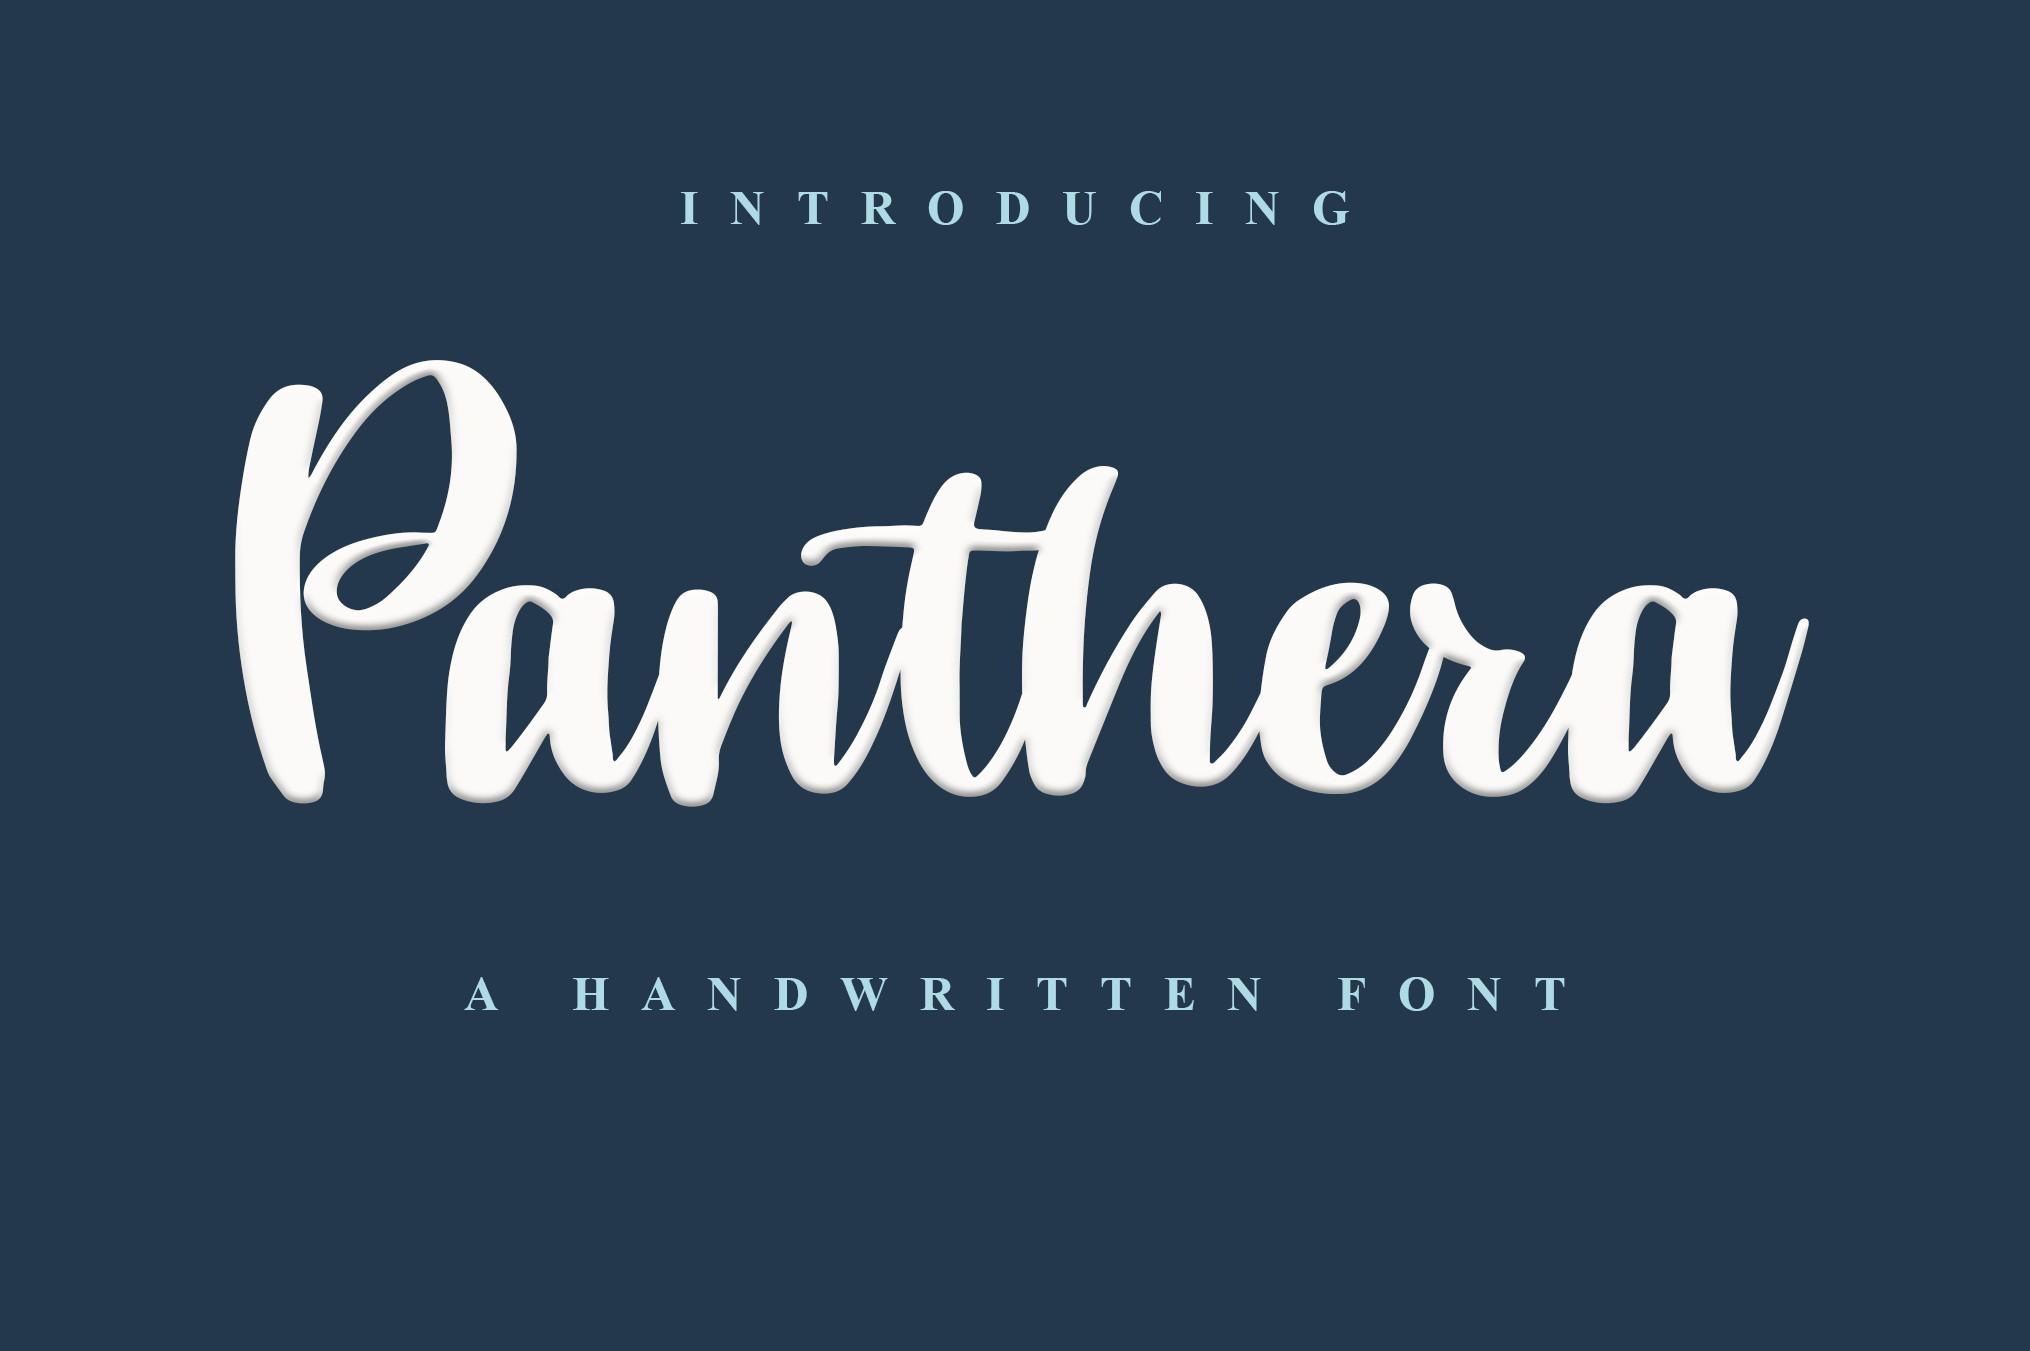 Panthera Font